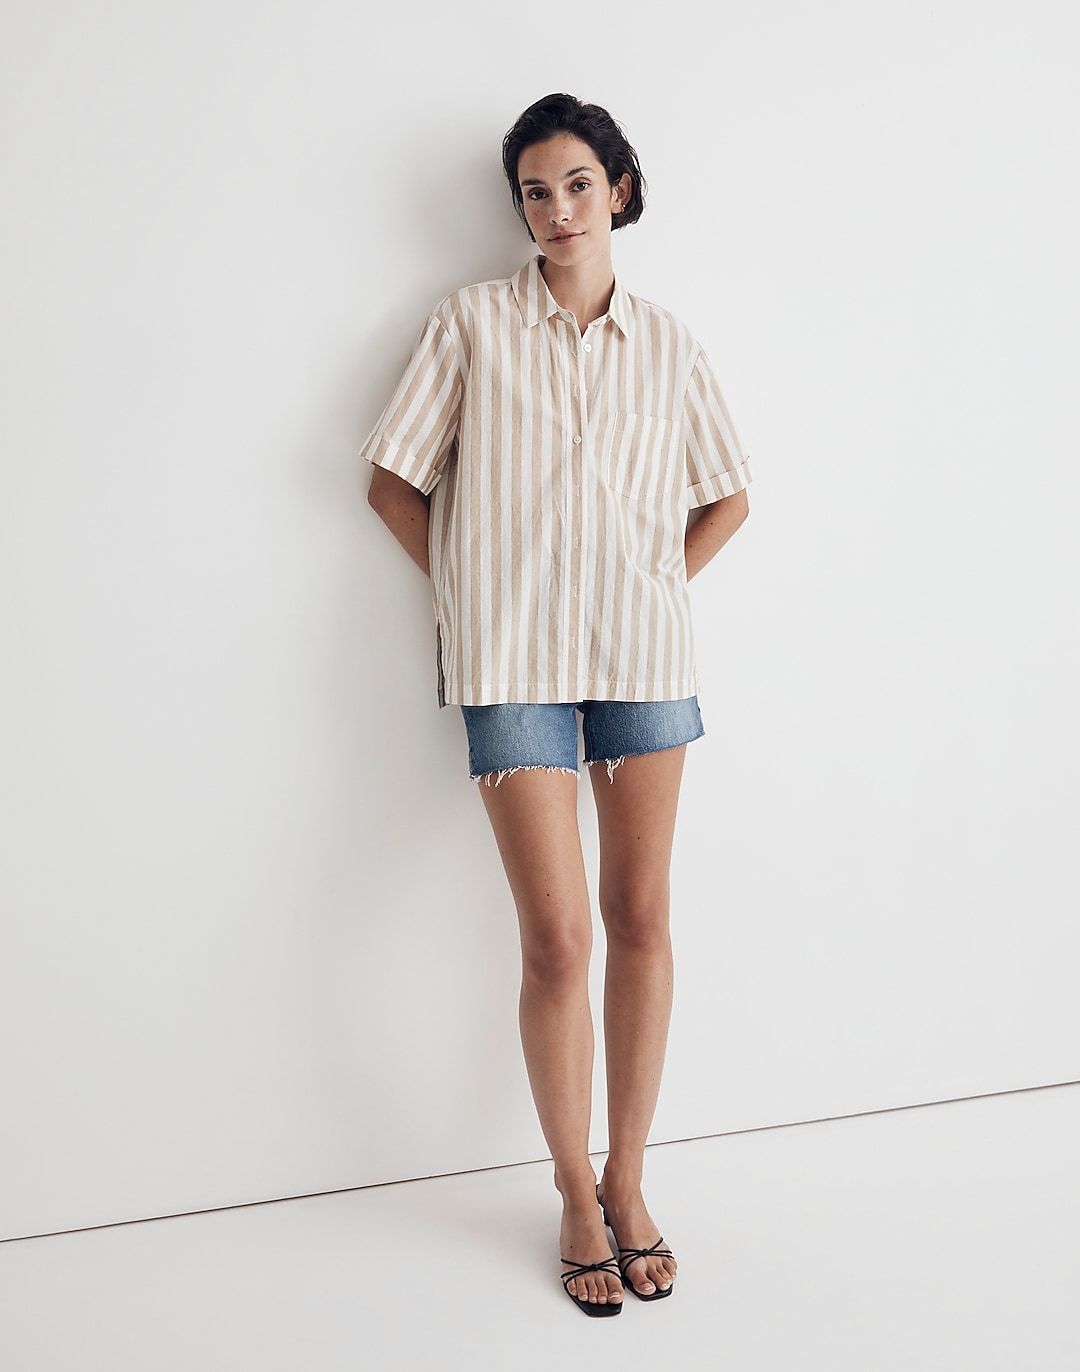 Signature Poplin Short-Sleeve Button-Down Shirt in Leray Stripe | Madewell